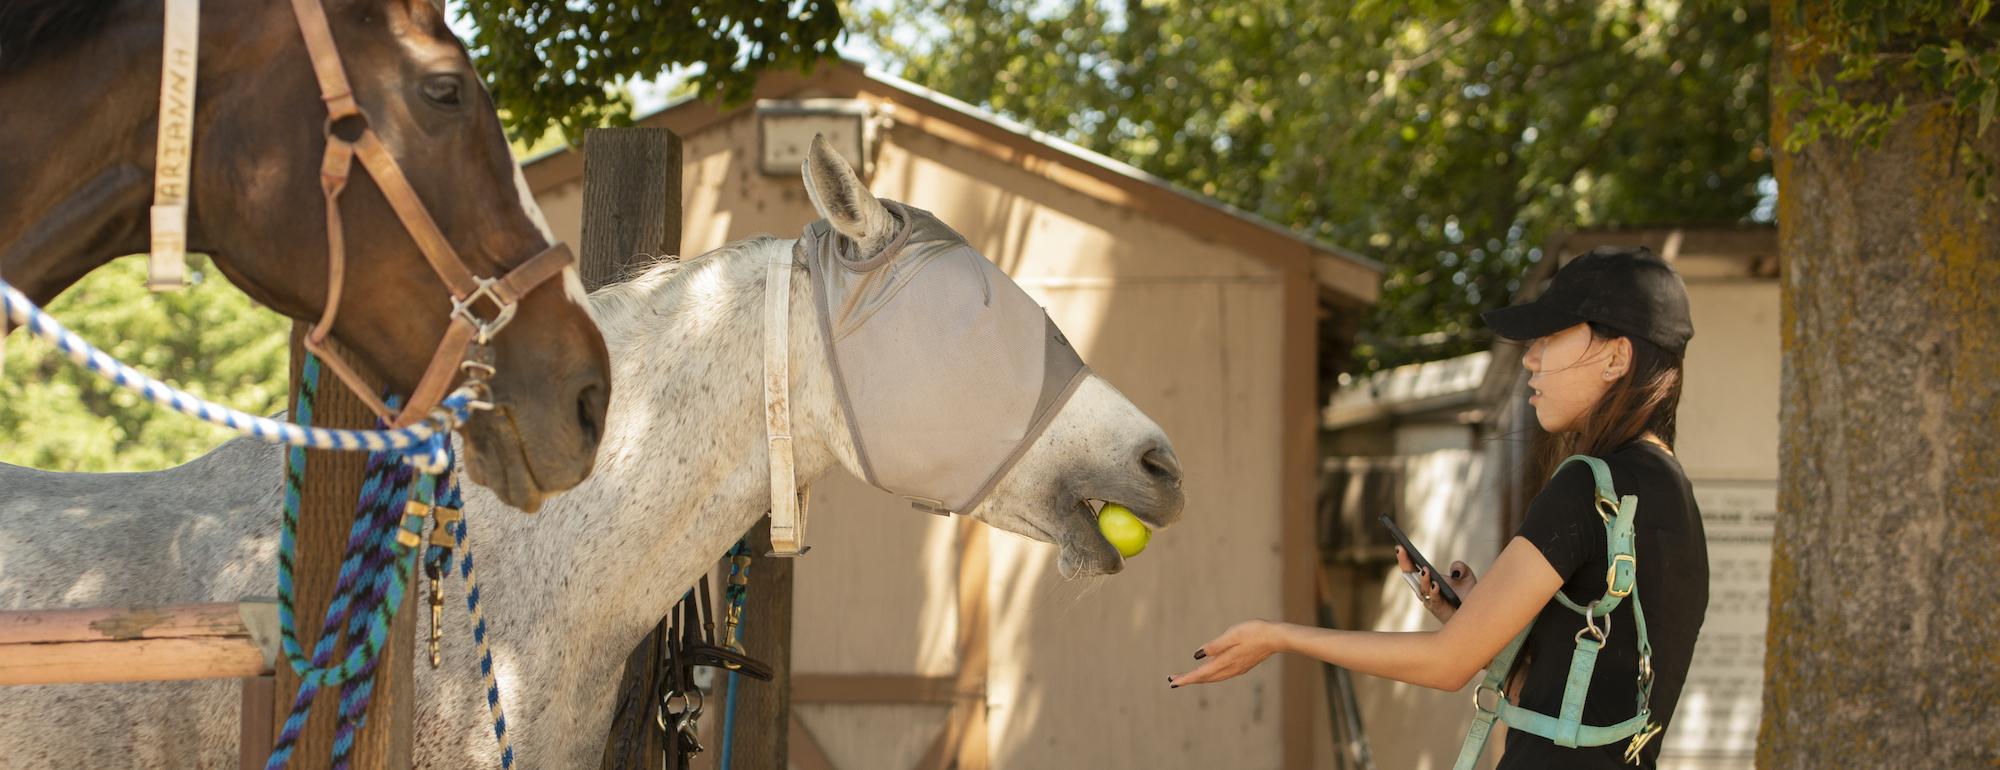 Student feeding horse an apple